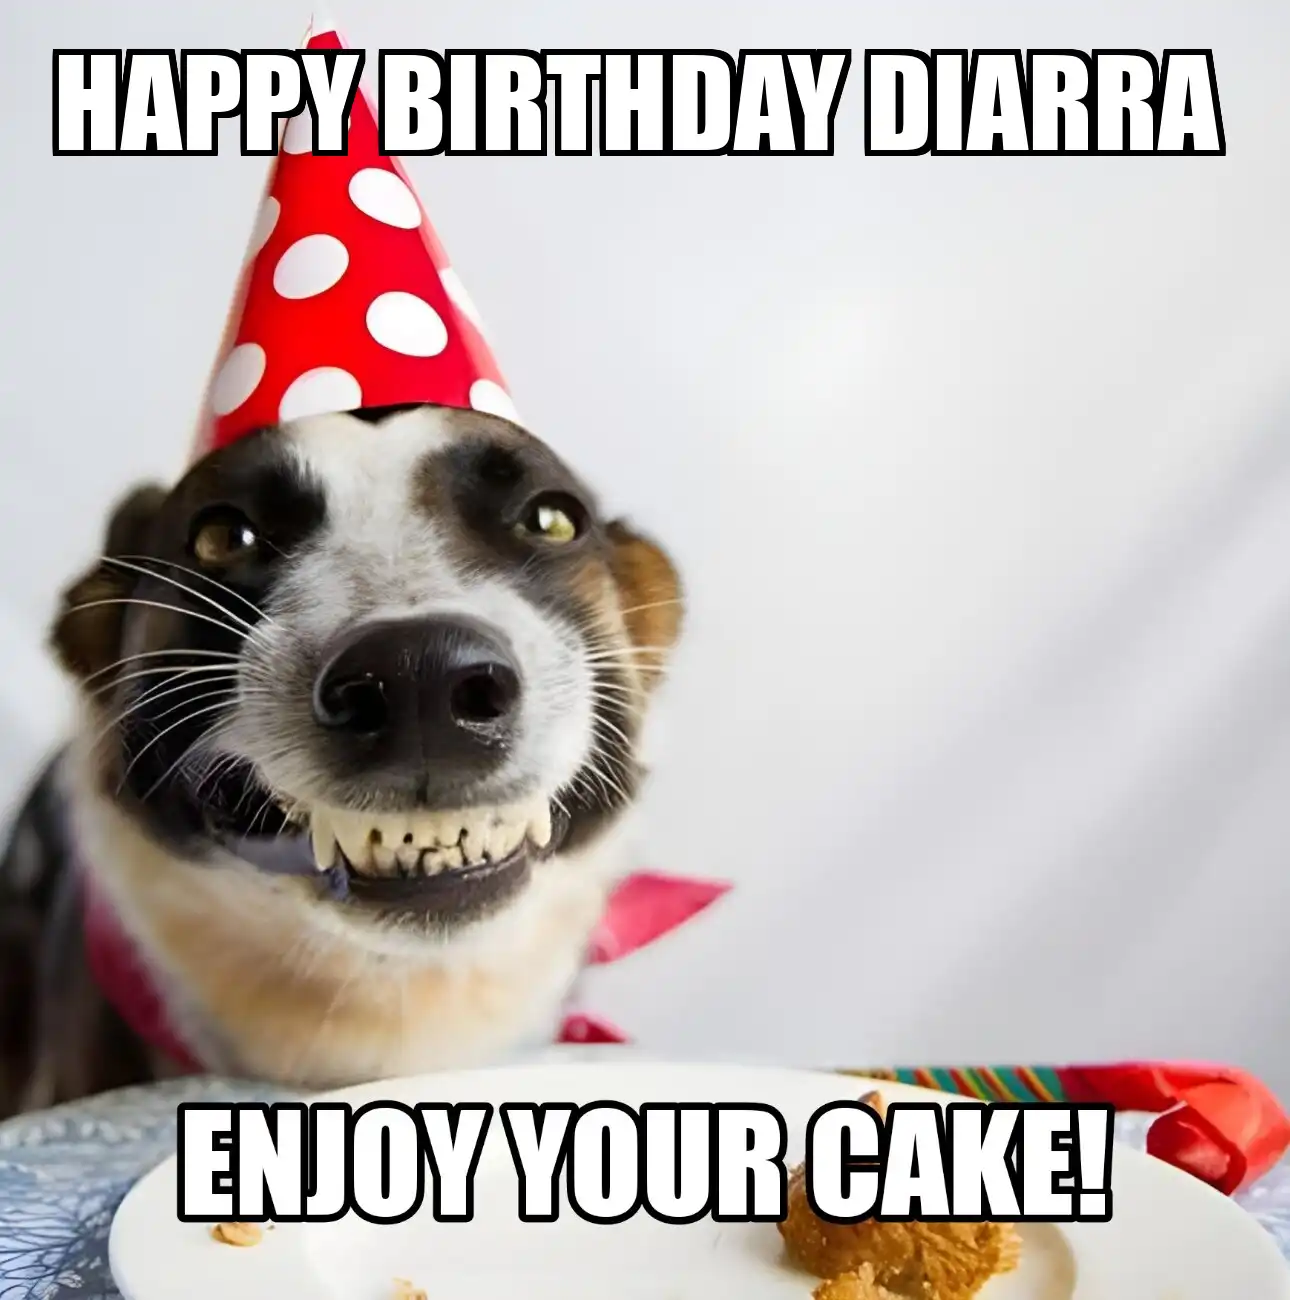 Happy Birthday Diarra Enjoy Your Cake Dog Meme